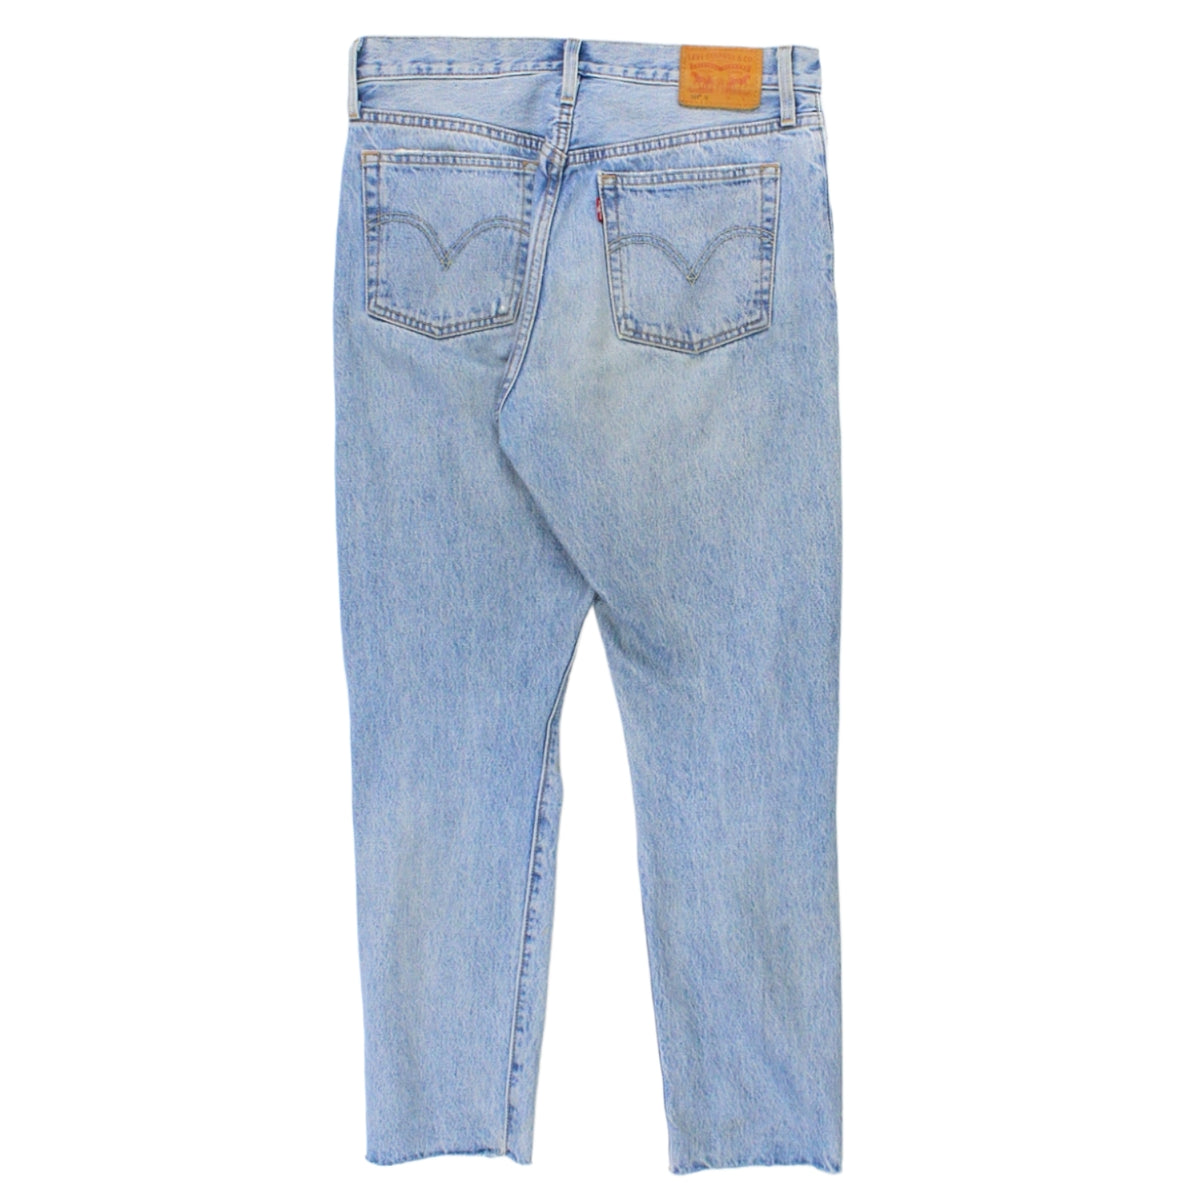 Levi's 501 Blue Distressed Jeans